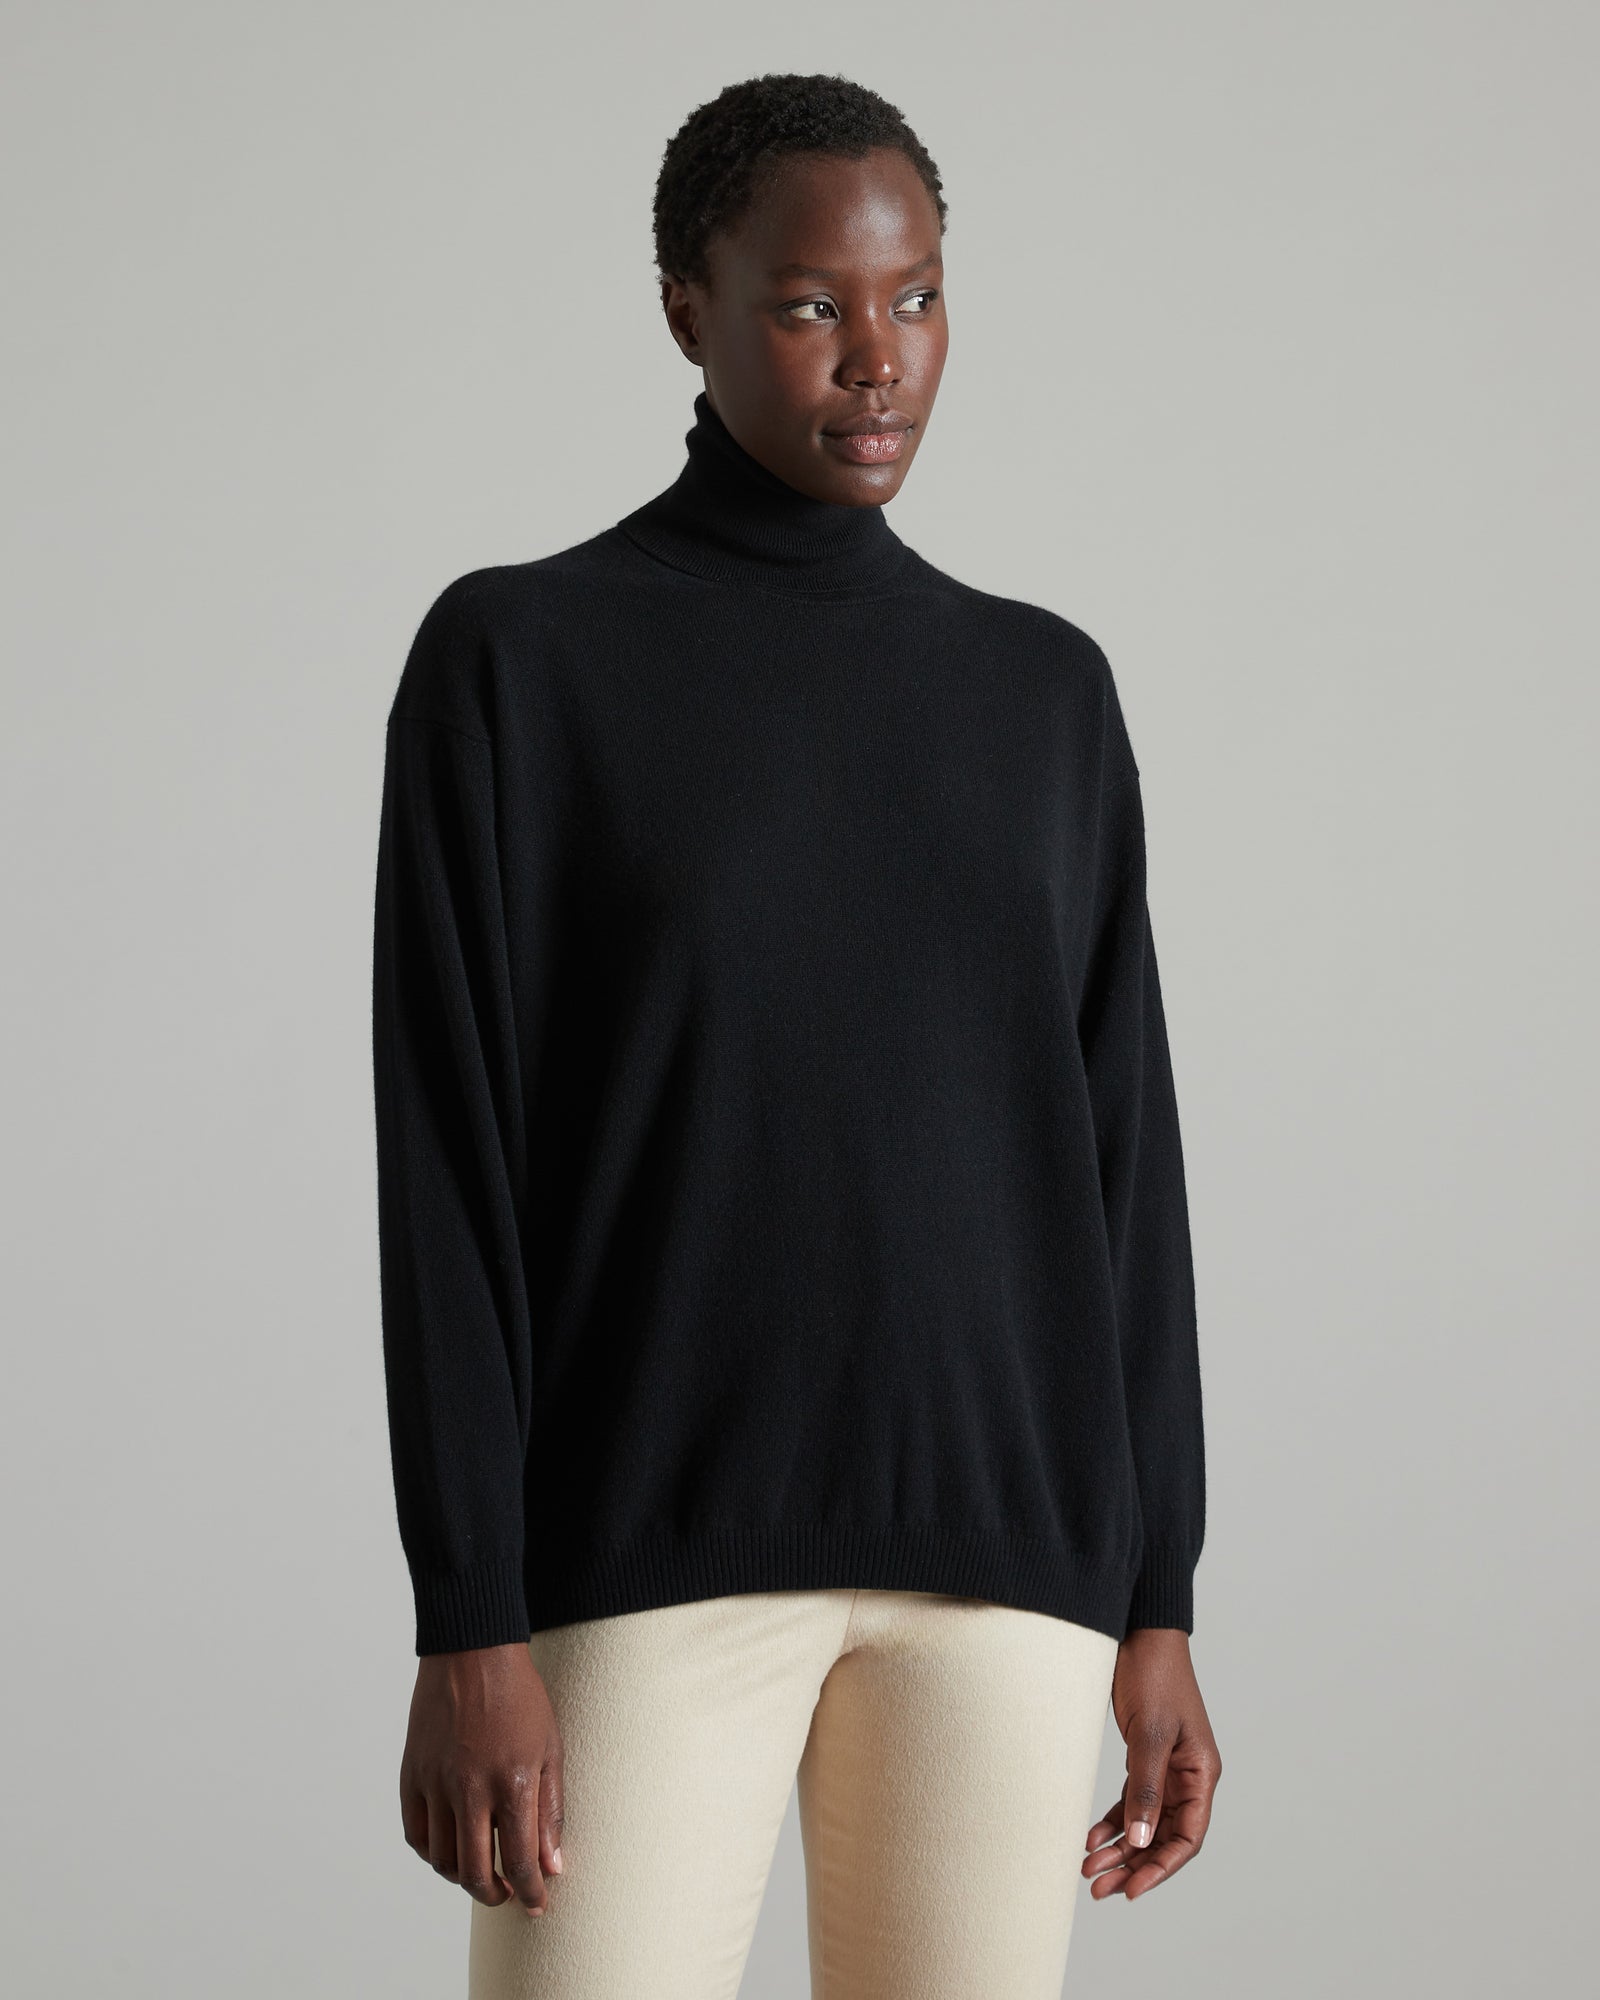 Black Kid Cashmere turtleneck sweater